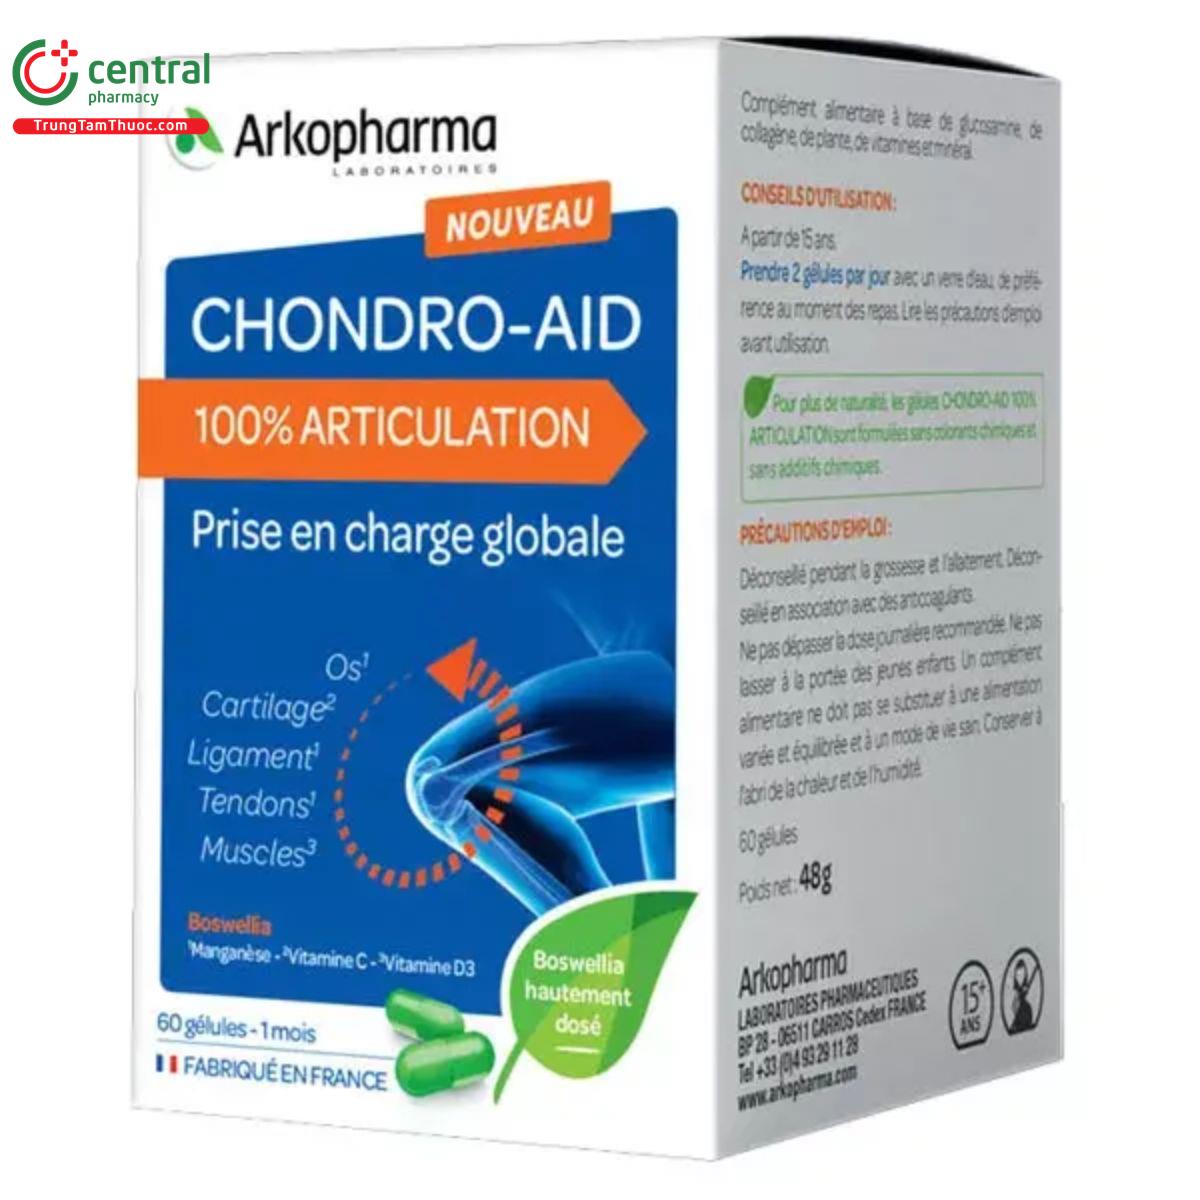 arkopharma chondro aid 100 articulation 7 E1132